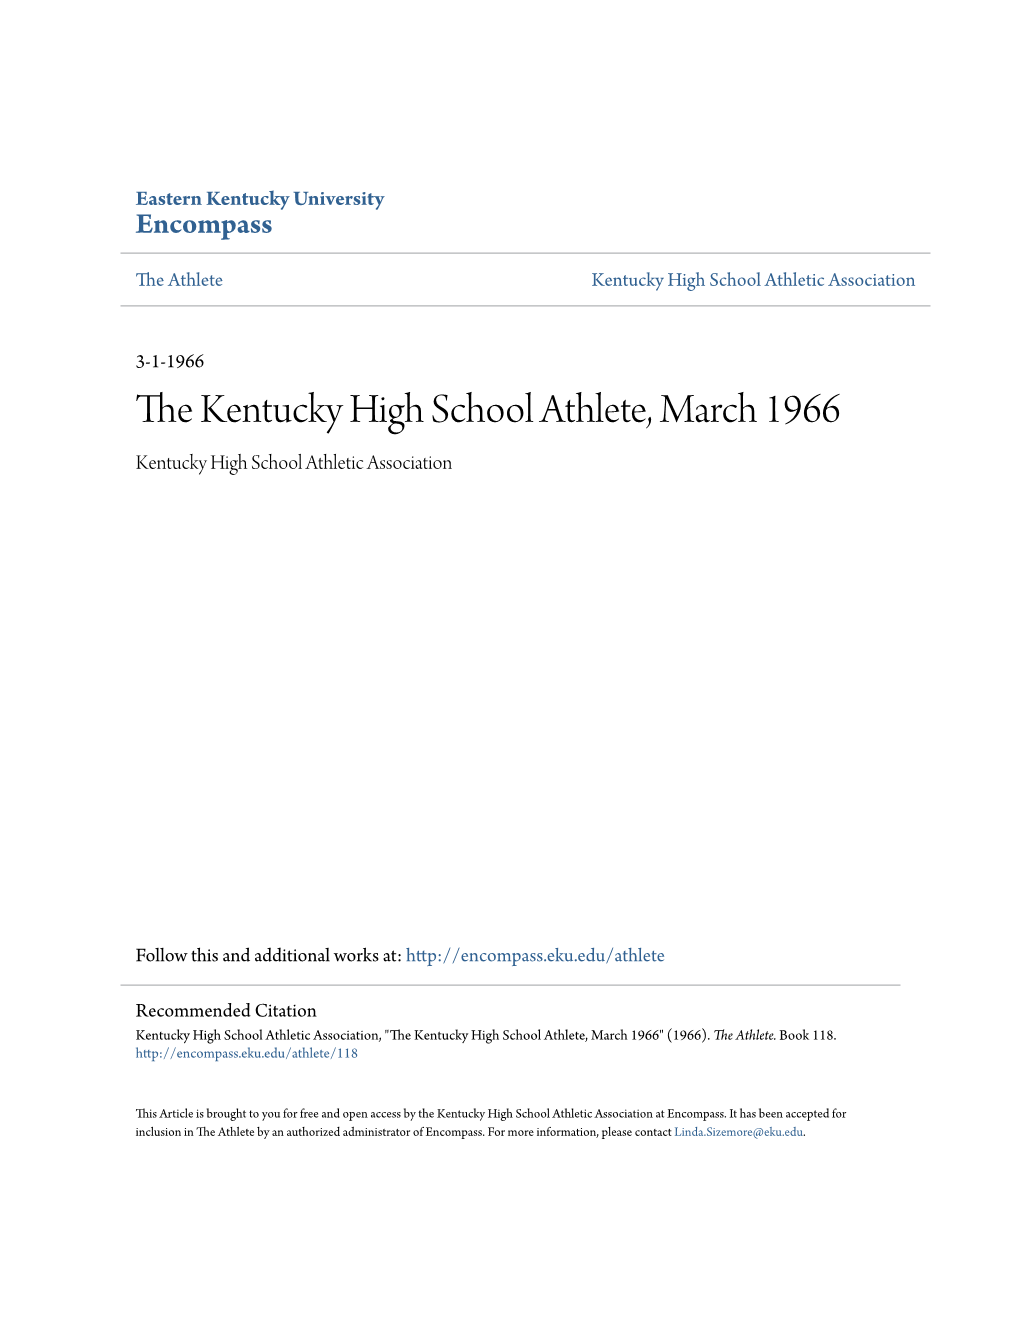 The Kentucky High School Athlete, March 1966 Kentucky High School Athletic Association